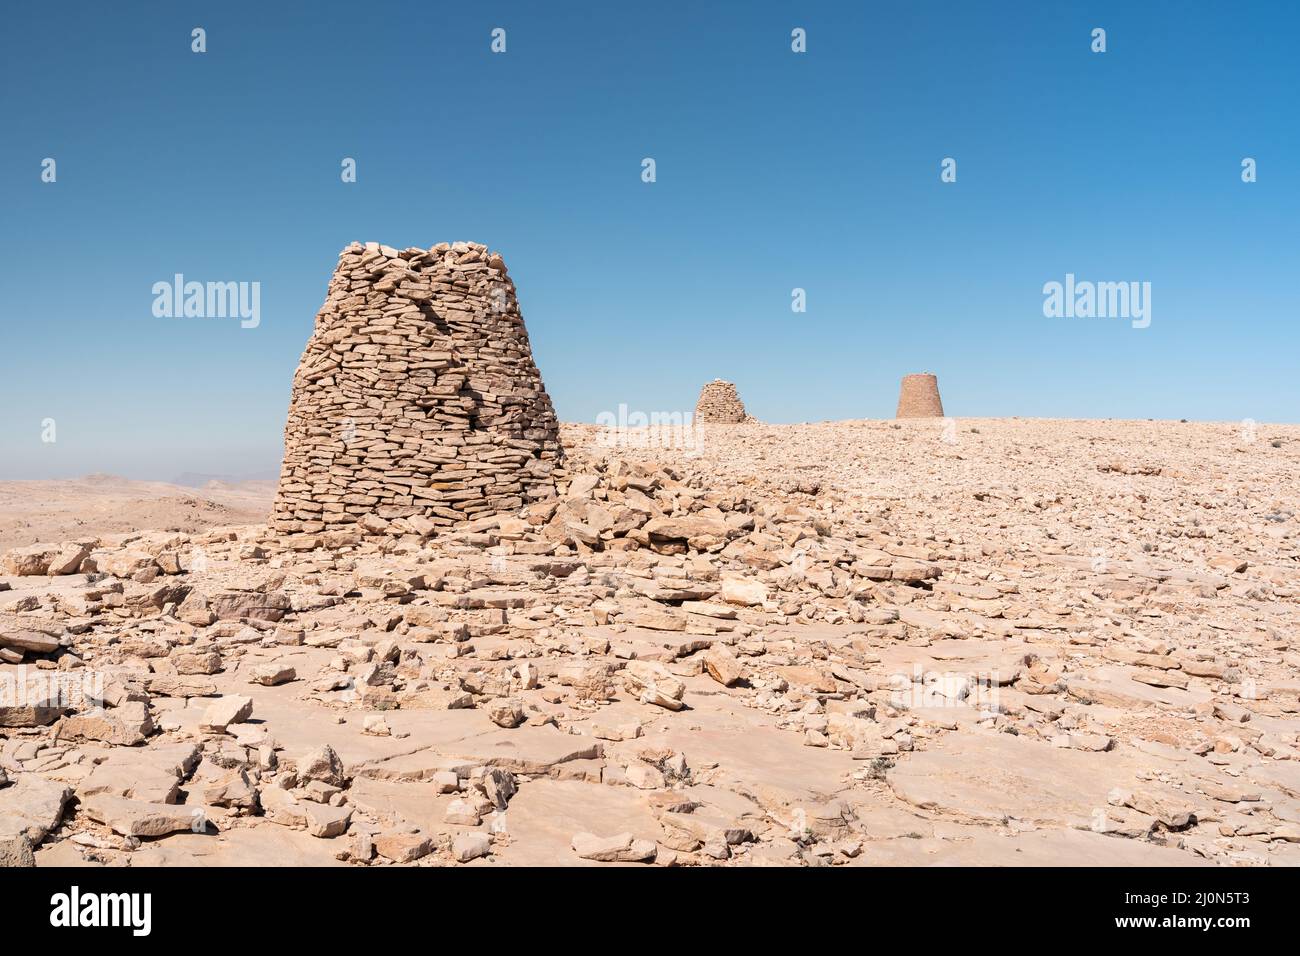 Bronze Age beehive burial tombs near Jaylah (Shir) in the Western Hajar Mountains of Oman Stock Photo